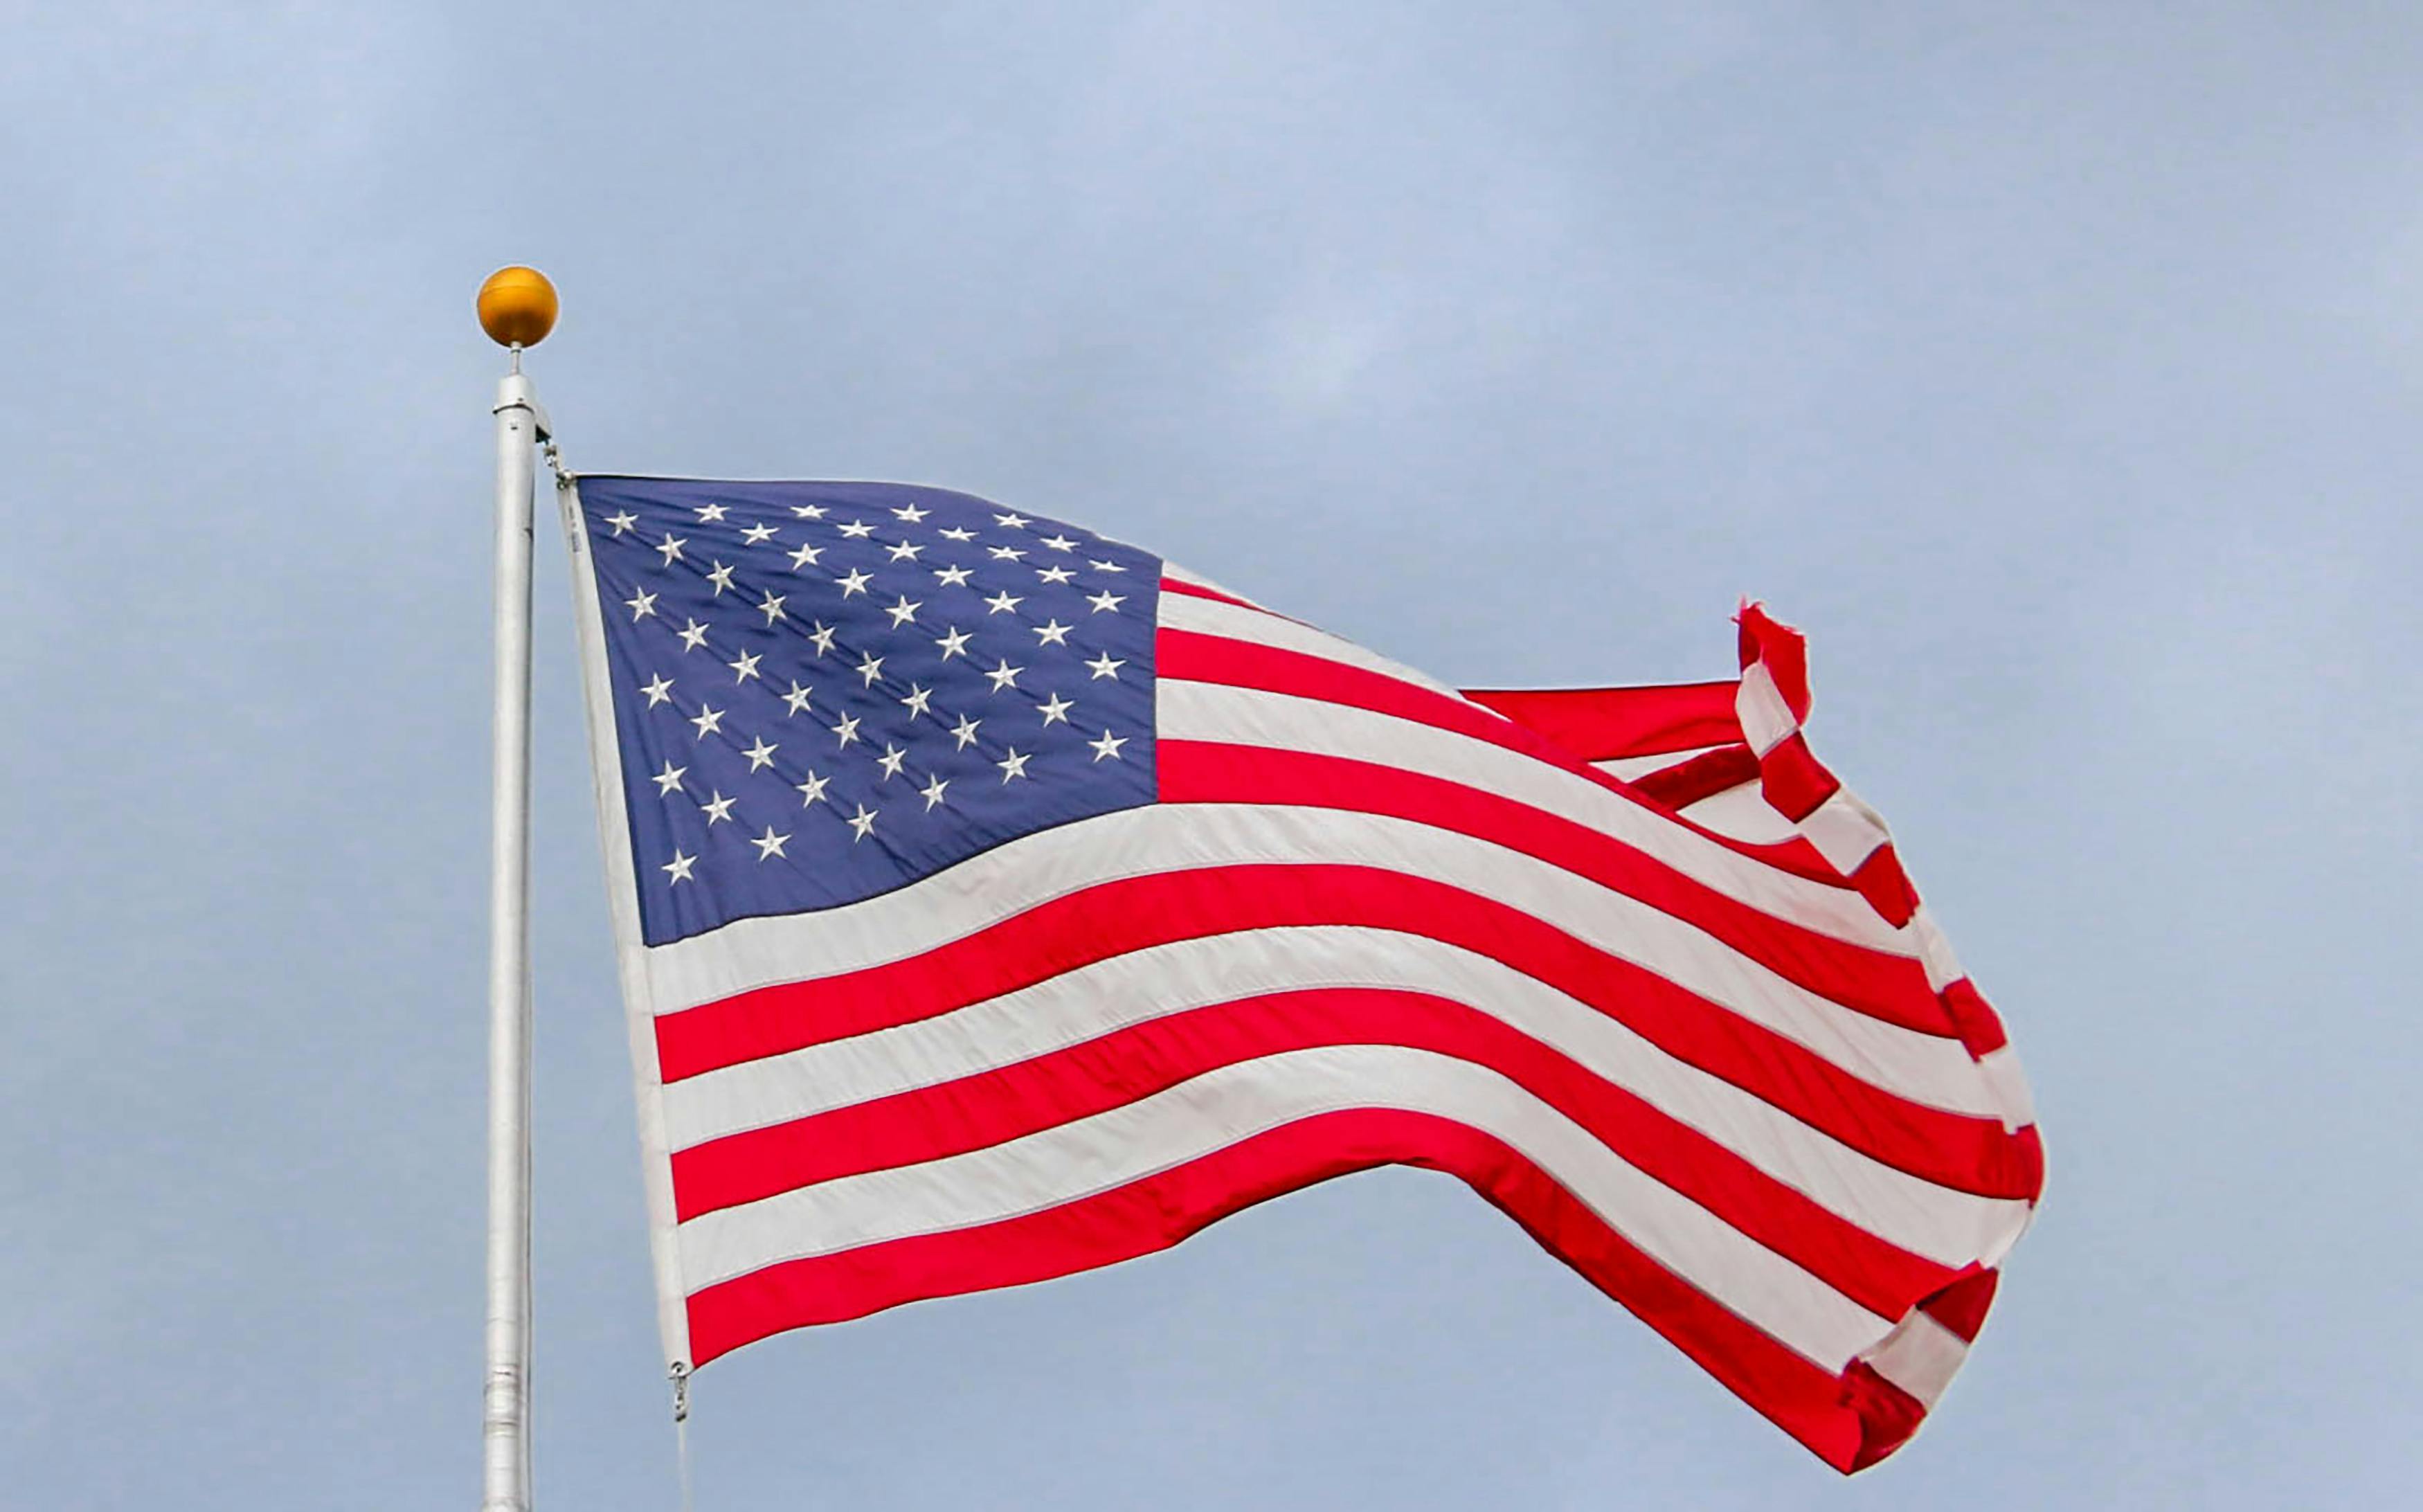 The USA flag on a metal pole | Source: Pexels